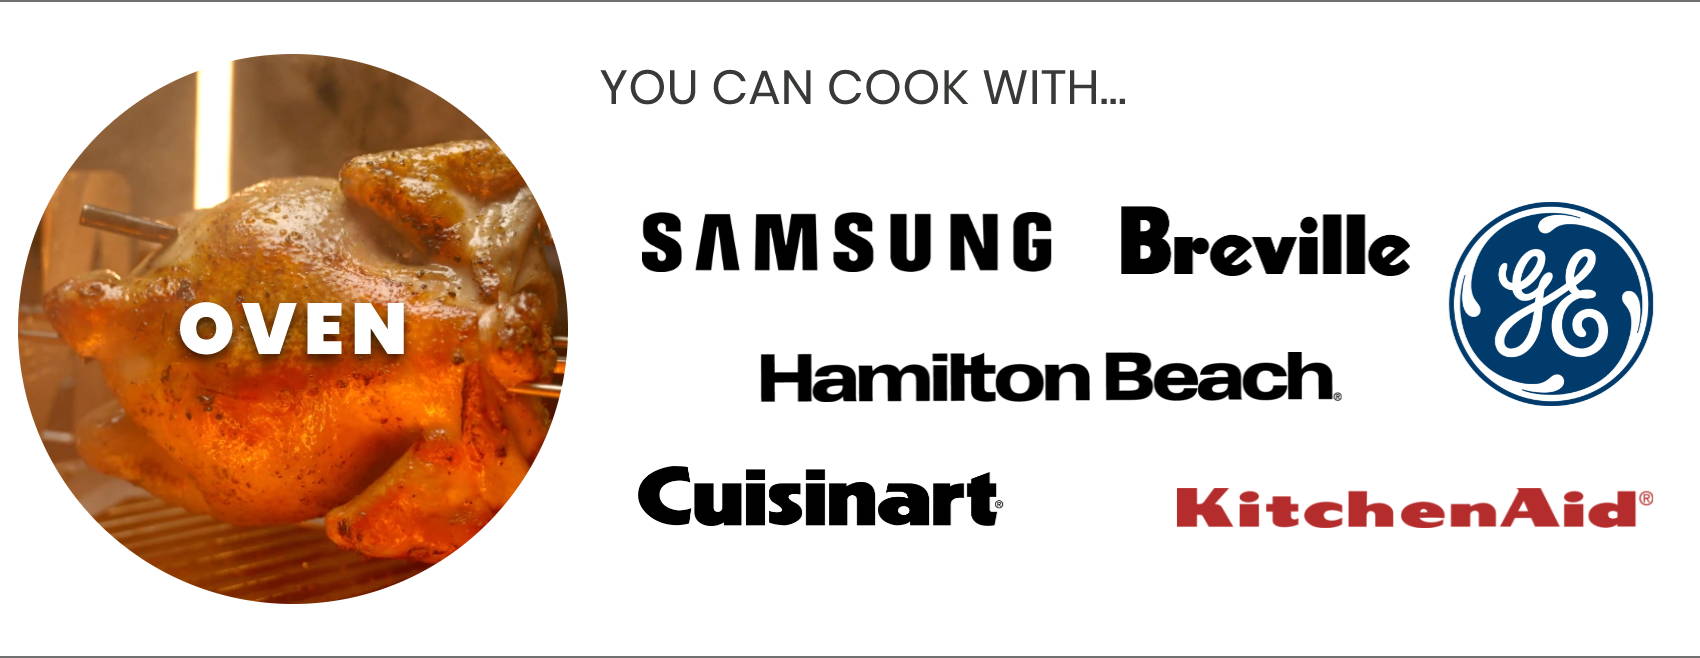 Samsung, Breville, GE Appliances, Hamilton Beach, Cuisinart, KitchenAid